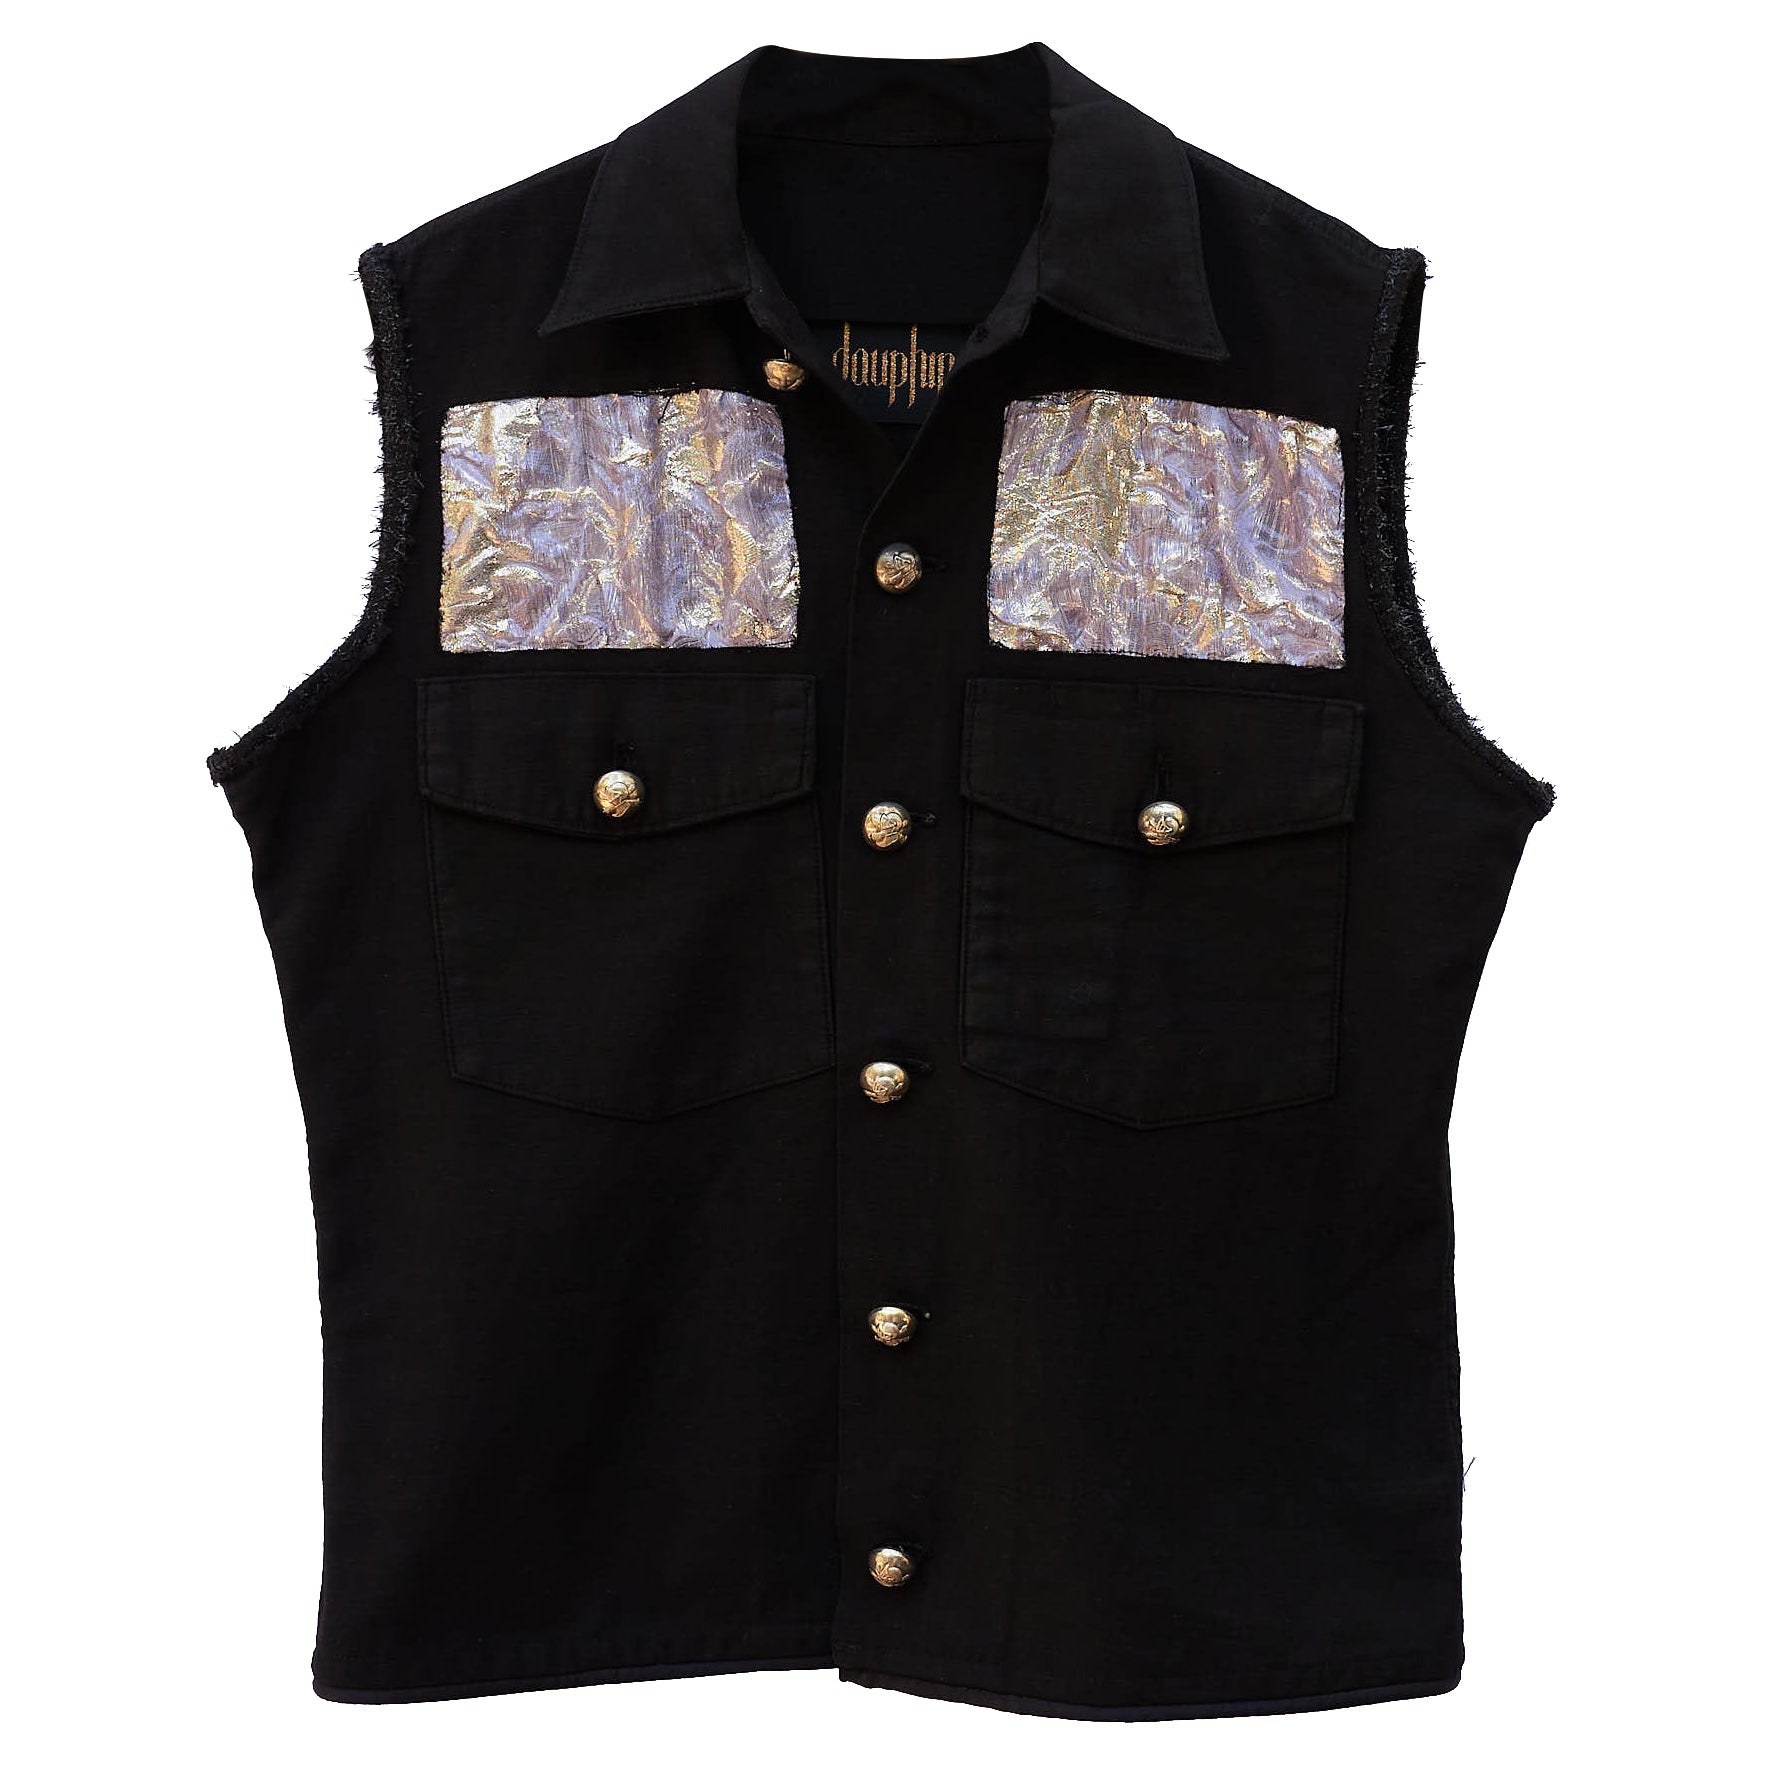 Sleeveless Jacket Vest Embellished Black Lilac Lurex Brocade J Dauphin